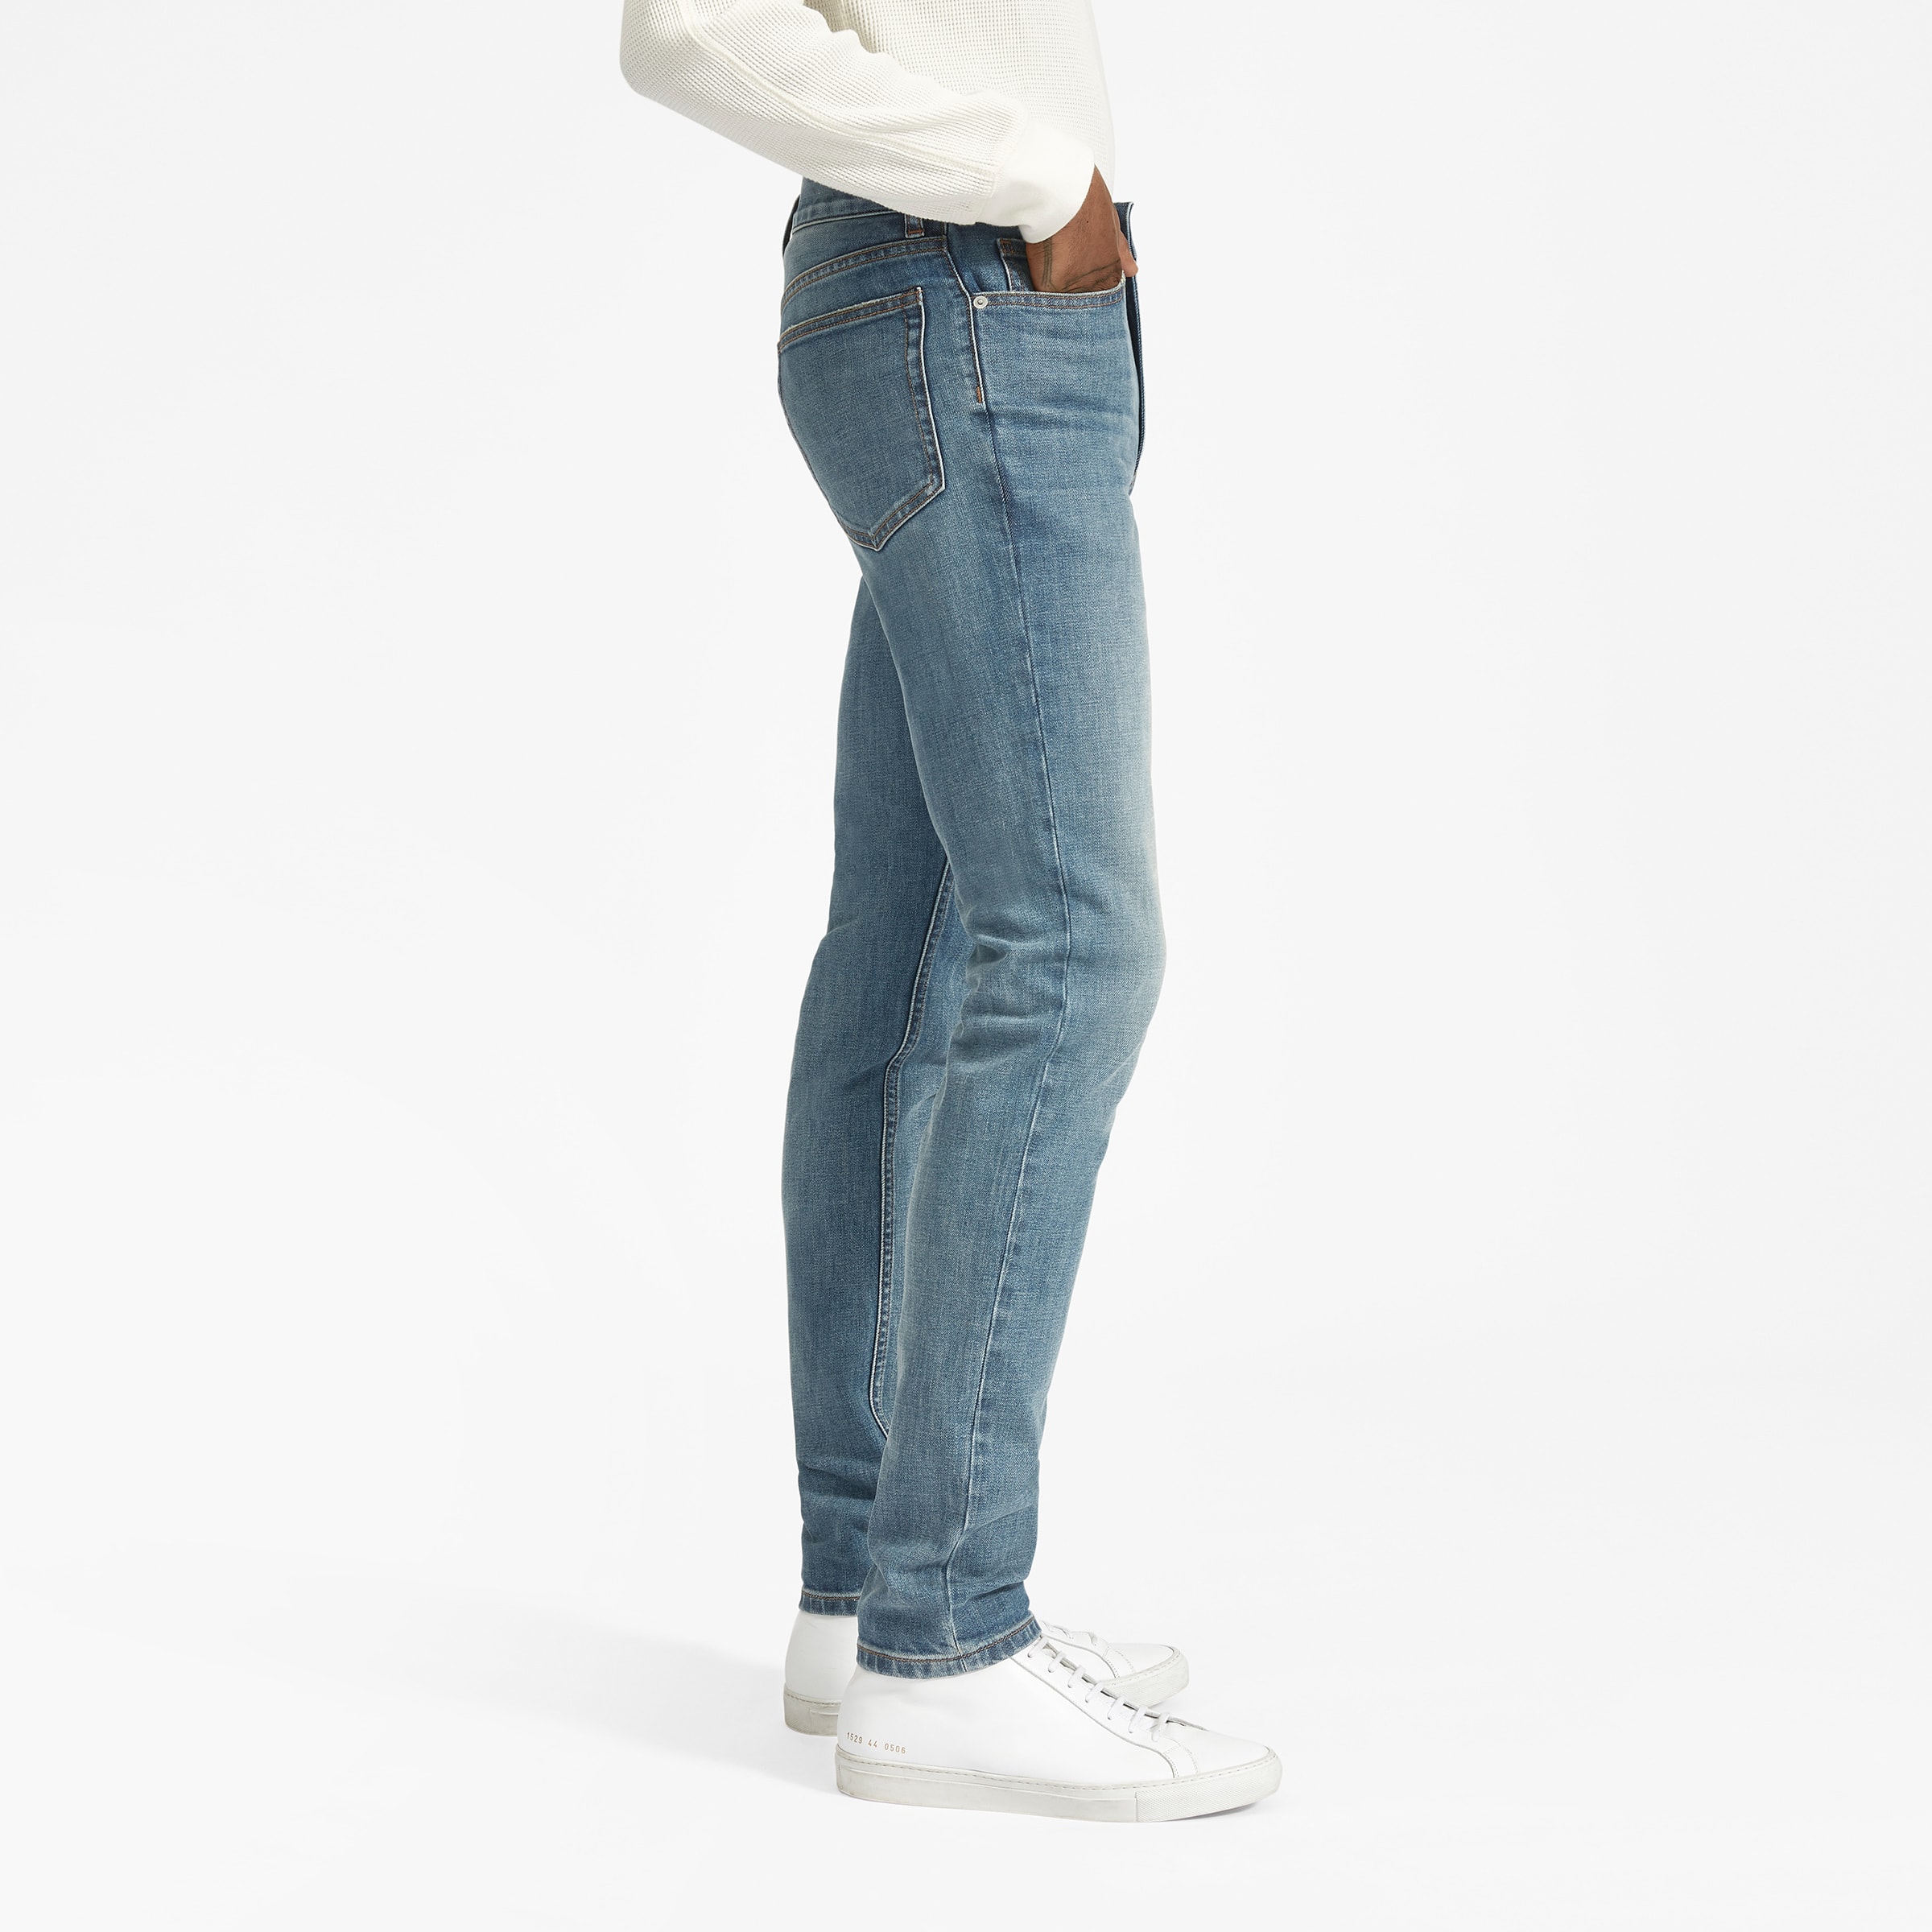 everlane jeans men's